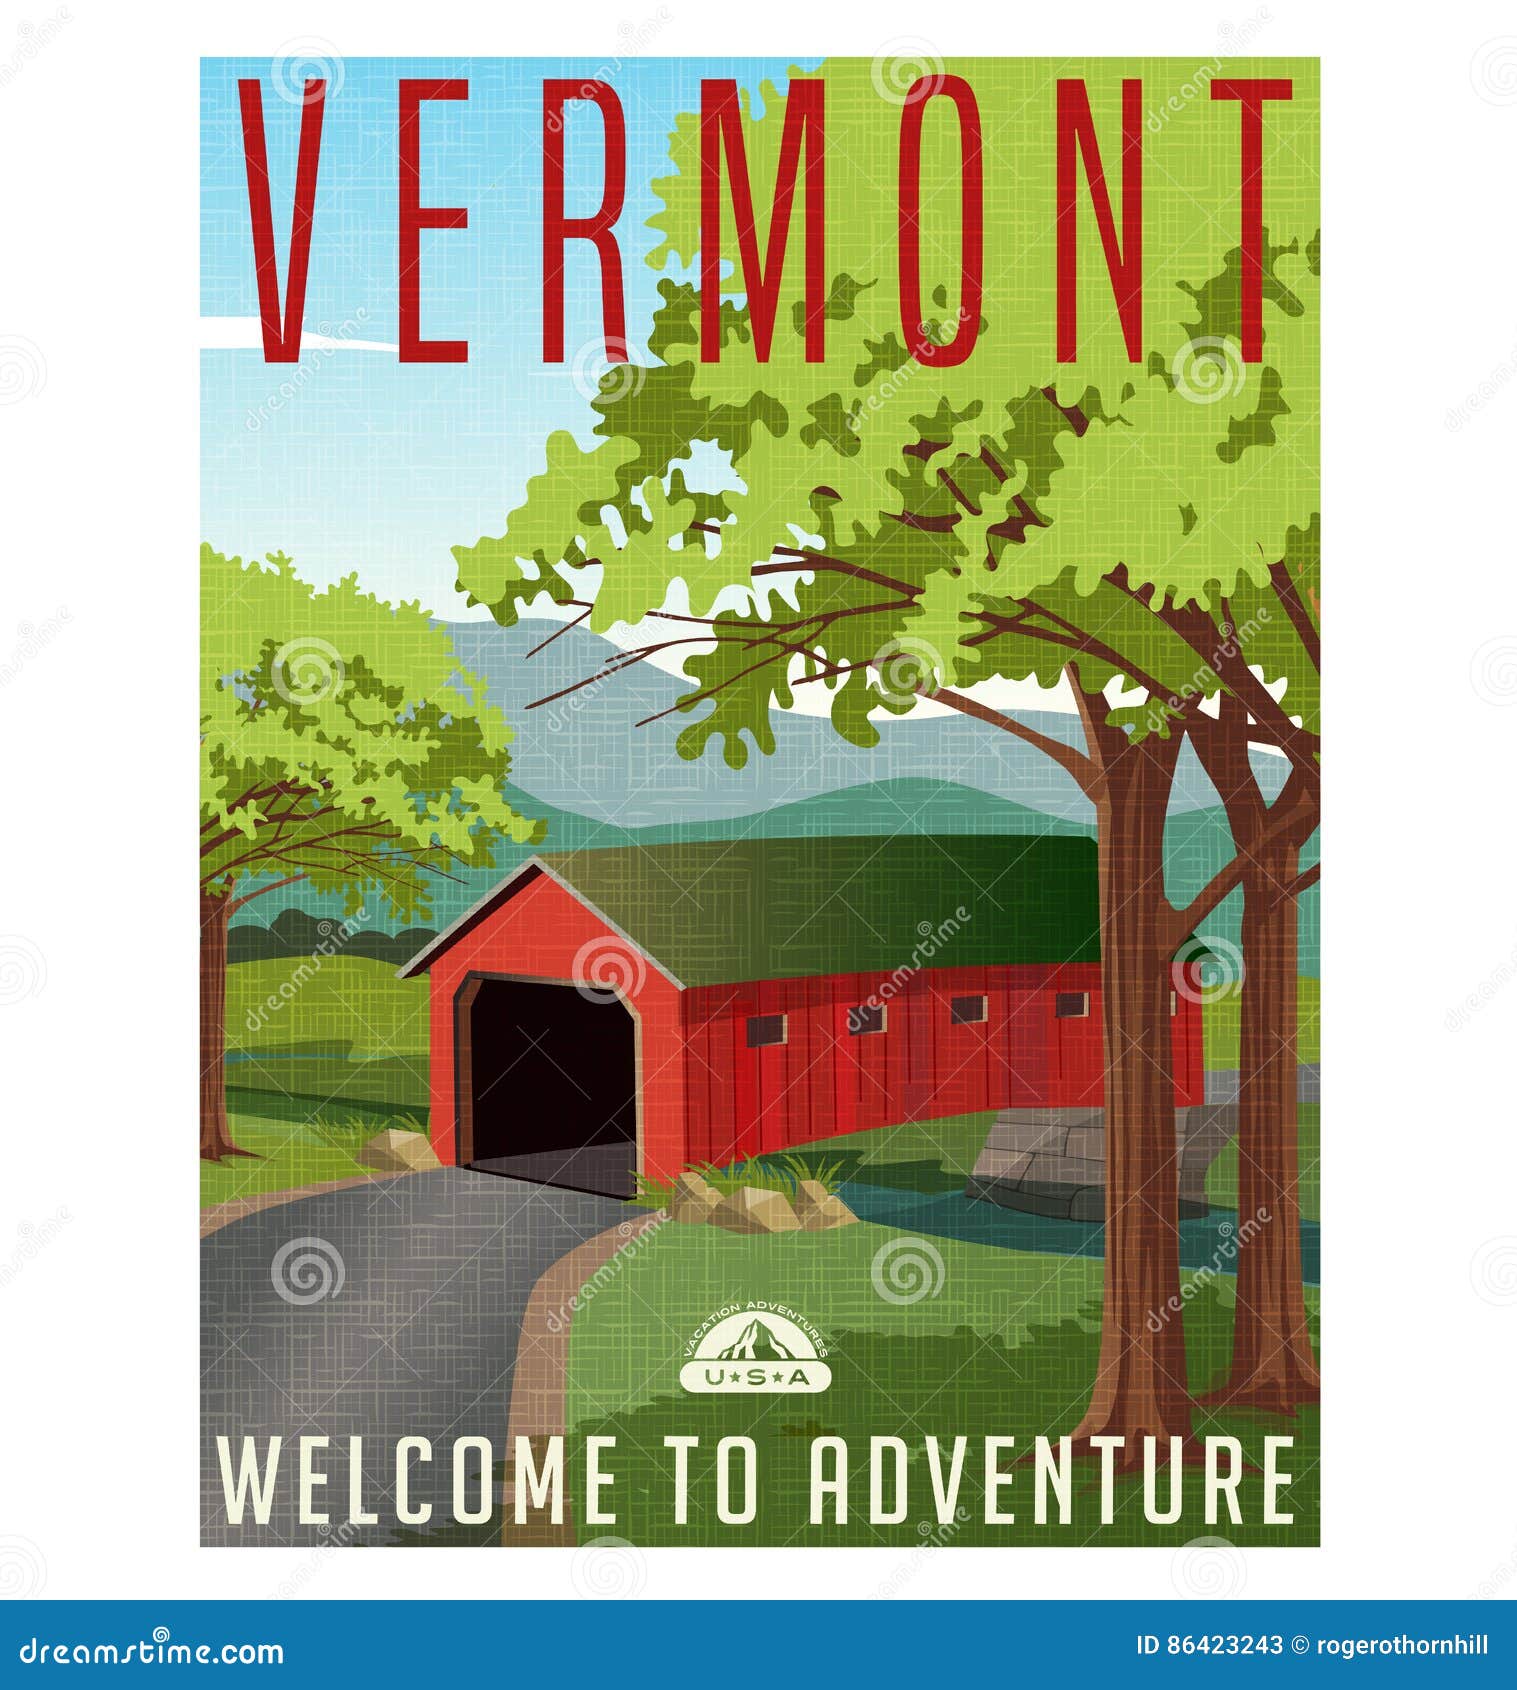 vermont travel poster